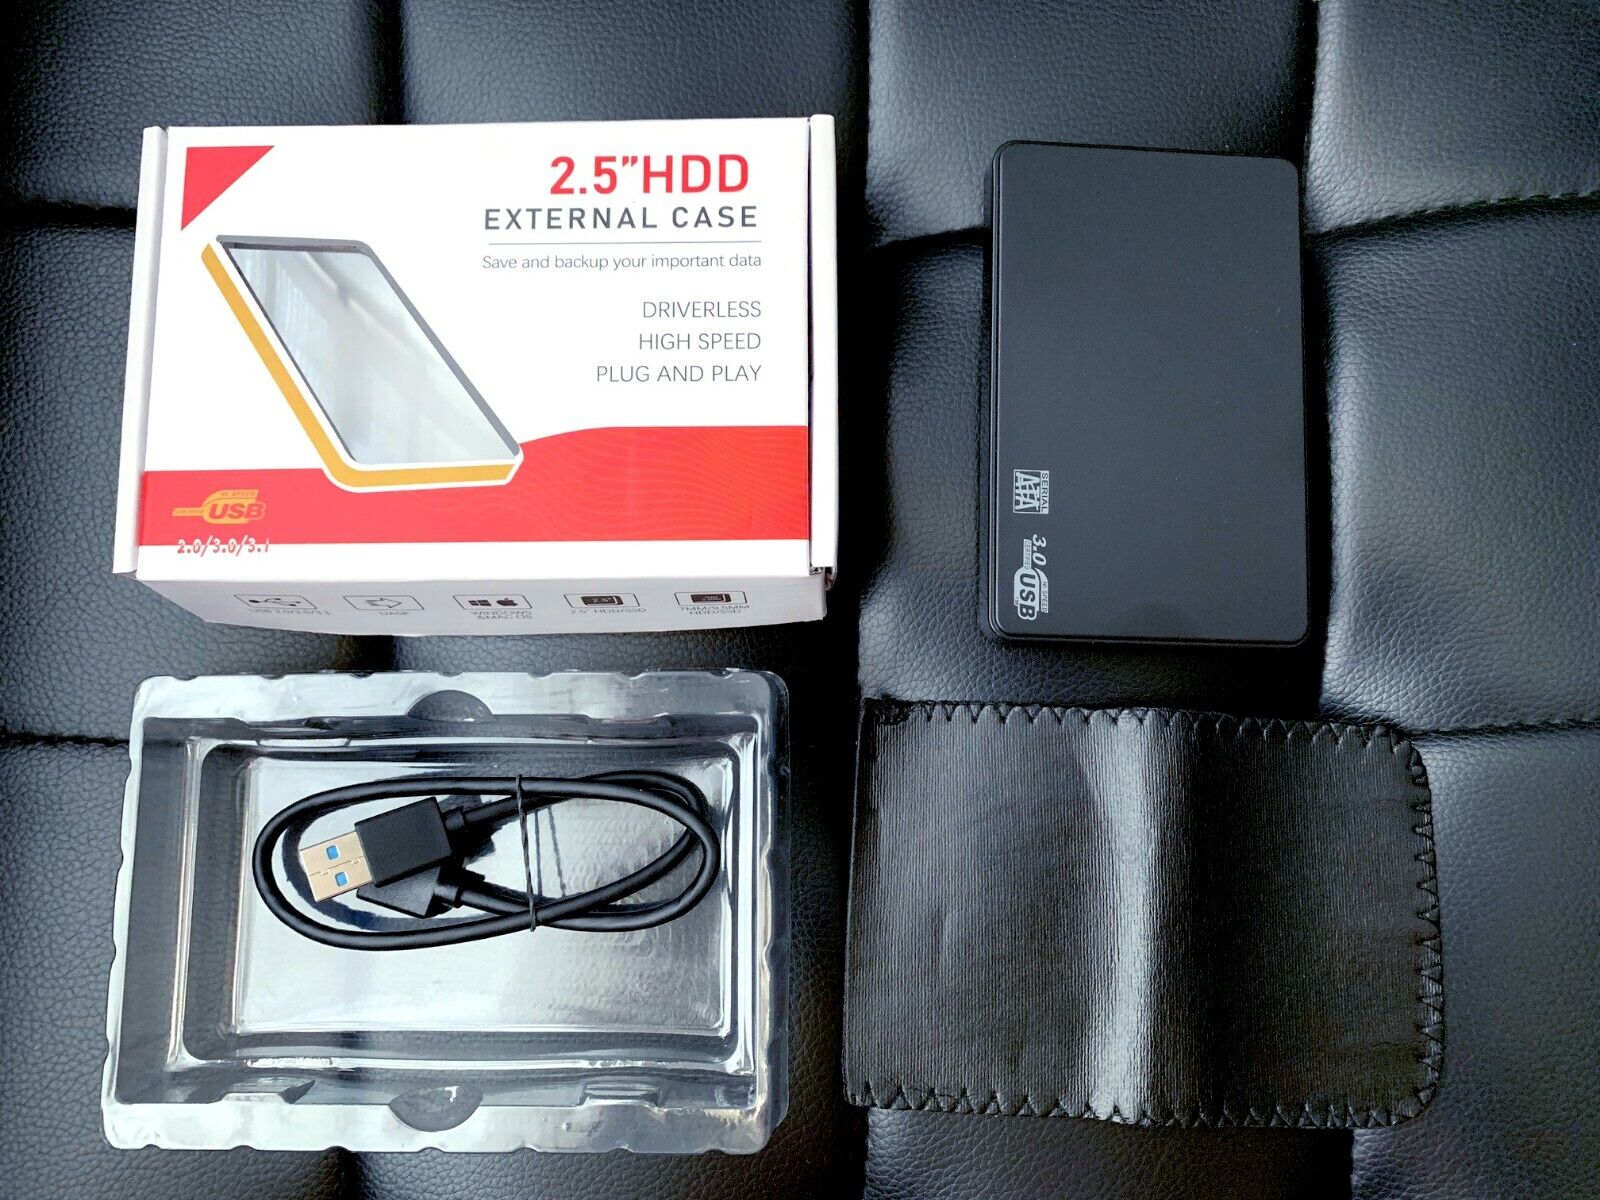 2.5" SATA Hard Drive External USB 3.0 Enclosure HDD Case Durable Case Retail Box